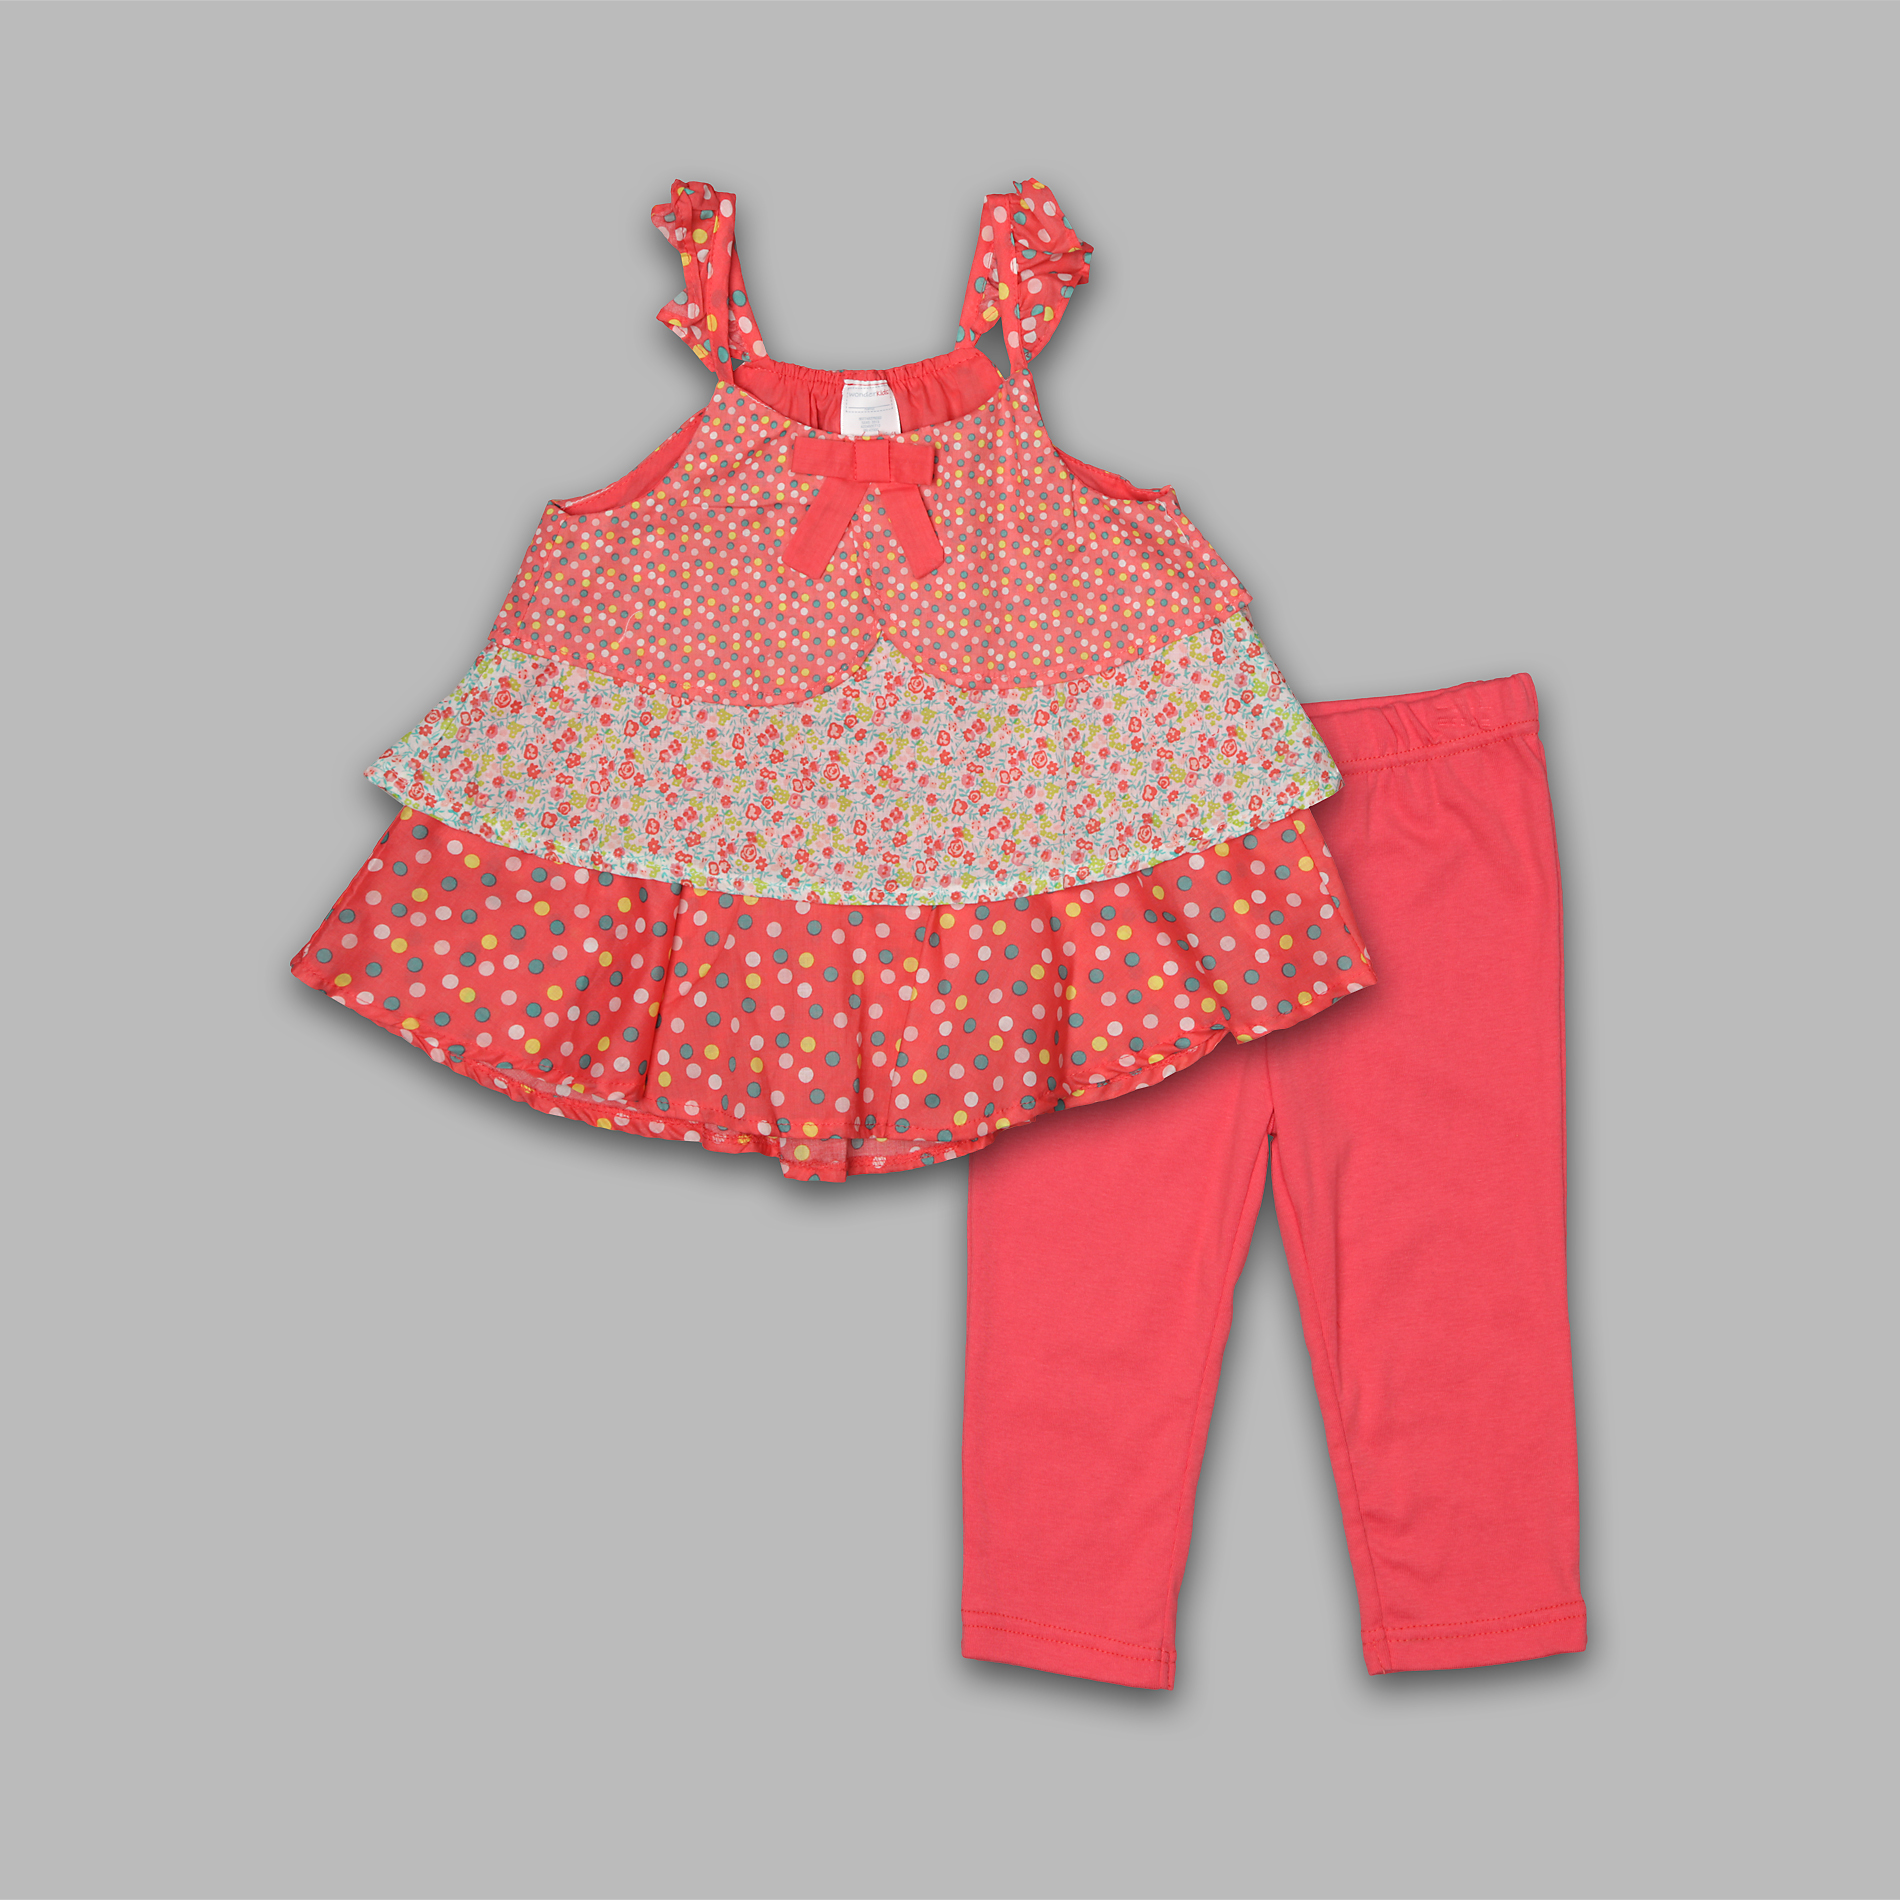 WonderKids Infant & Toddler Girl's 2 Pc Tiered Print Top & Pants Set